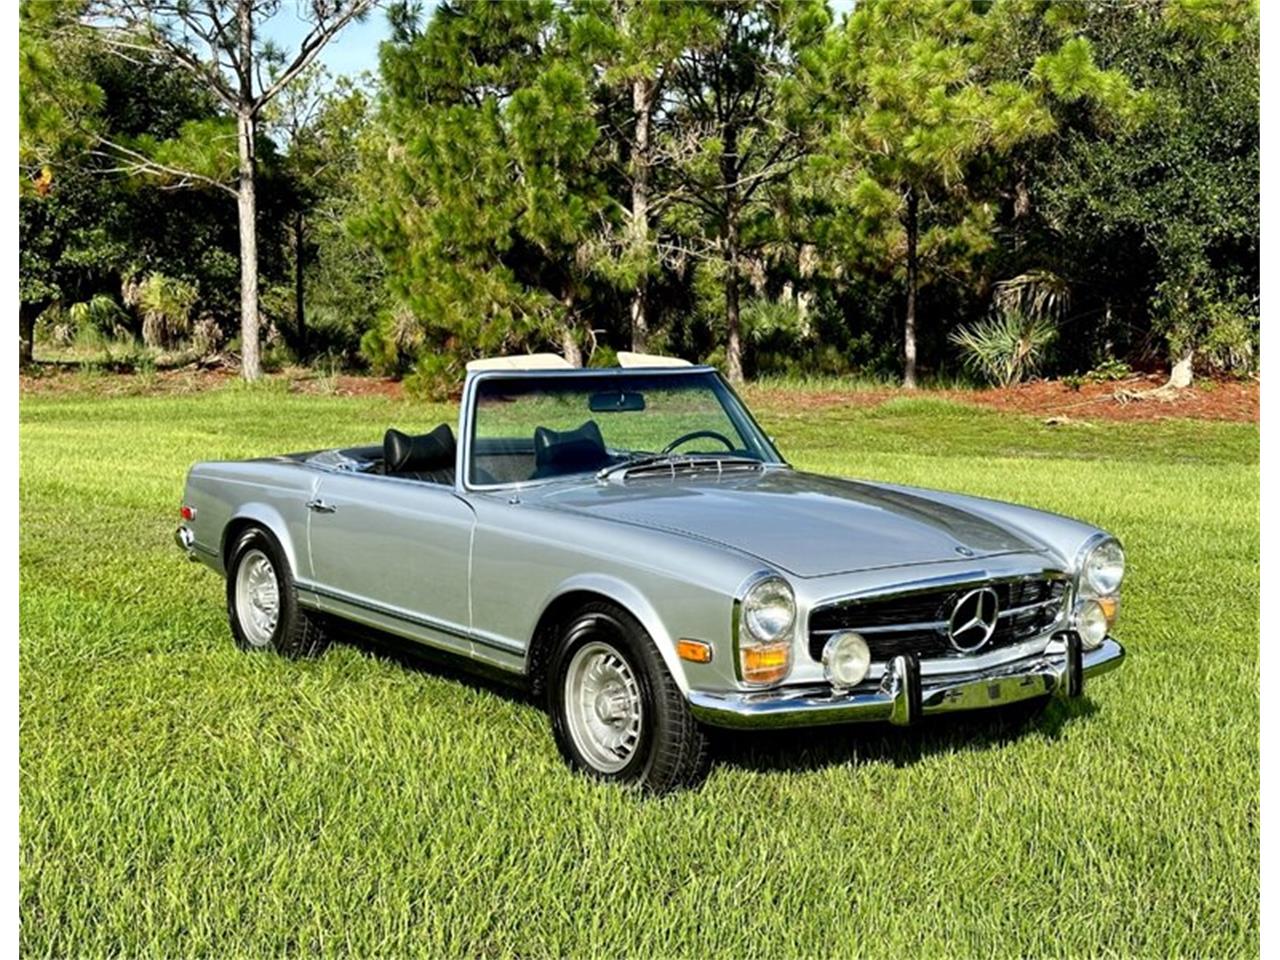 For Sale: 1969 Mercedes-Benz 280SL in Boca Raton, Florida for sale in Boca Raton, FL